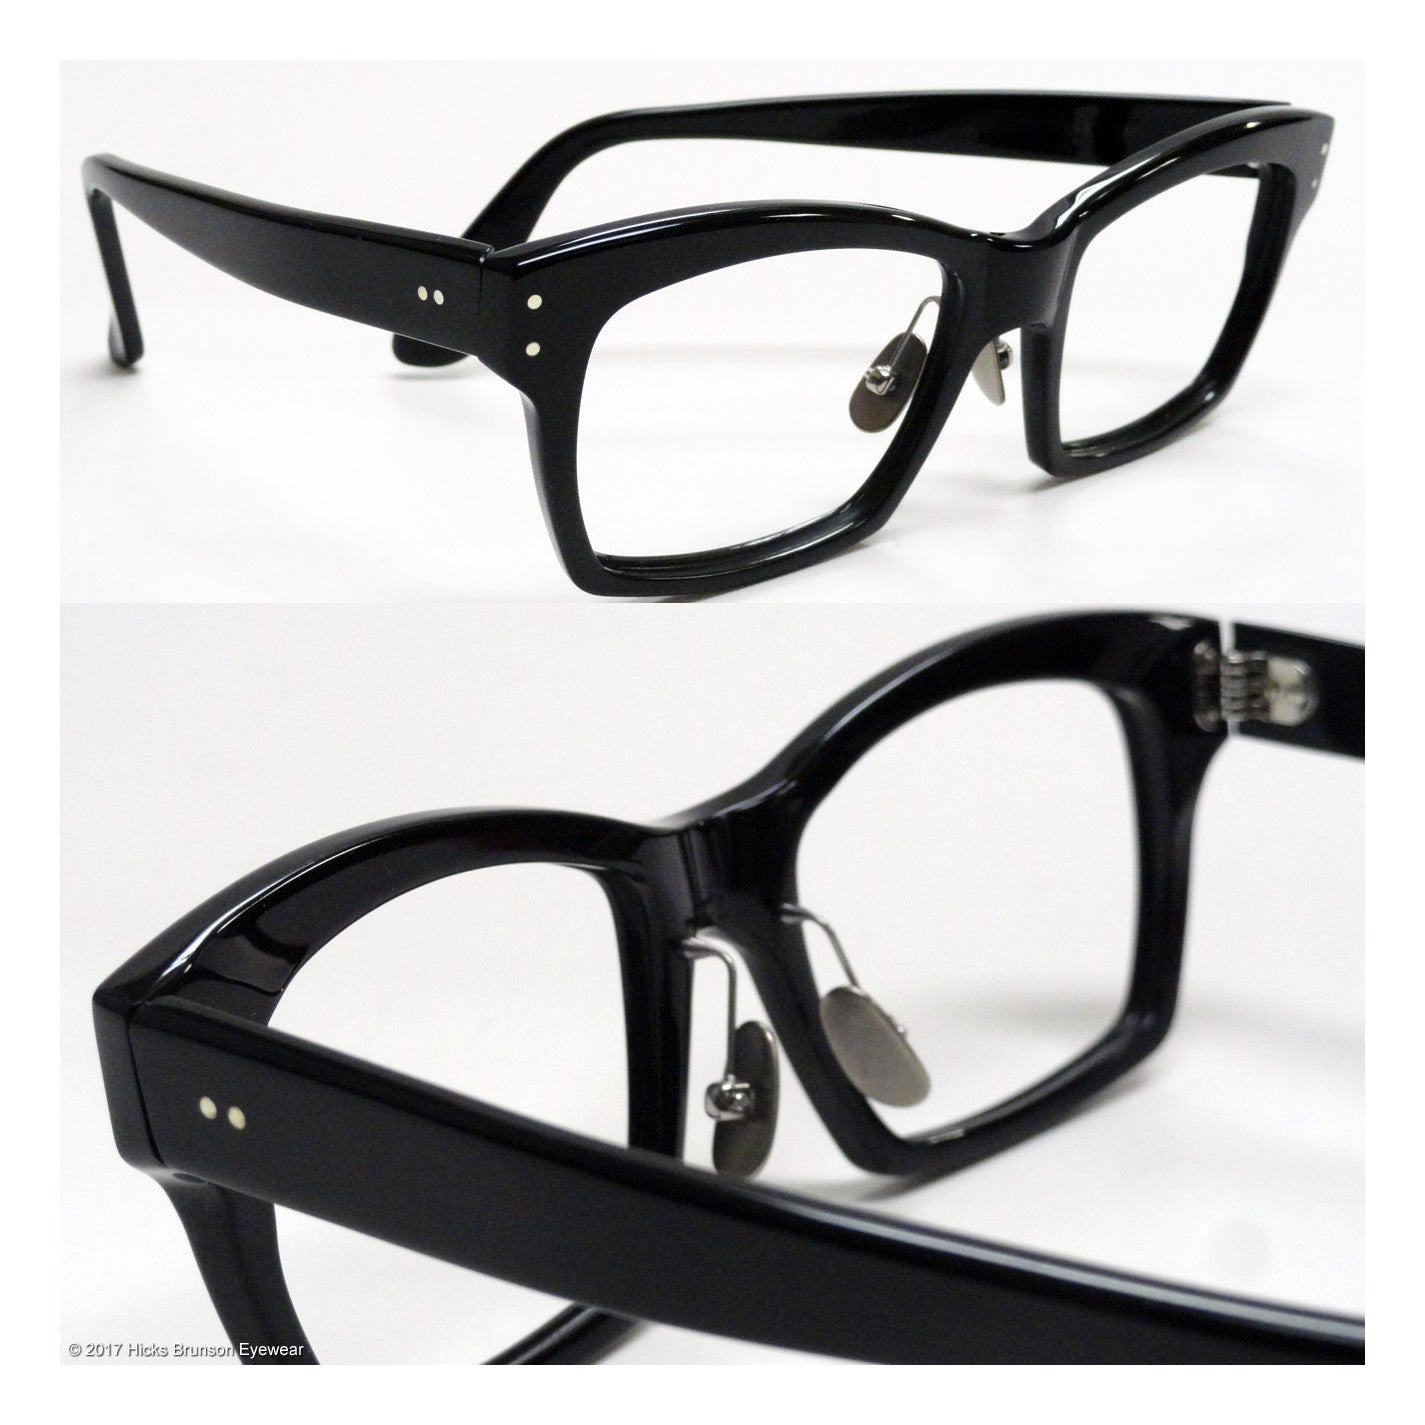 Receipt Spectacles, Eyeglasses Frames